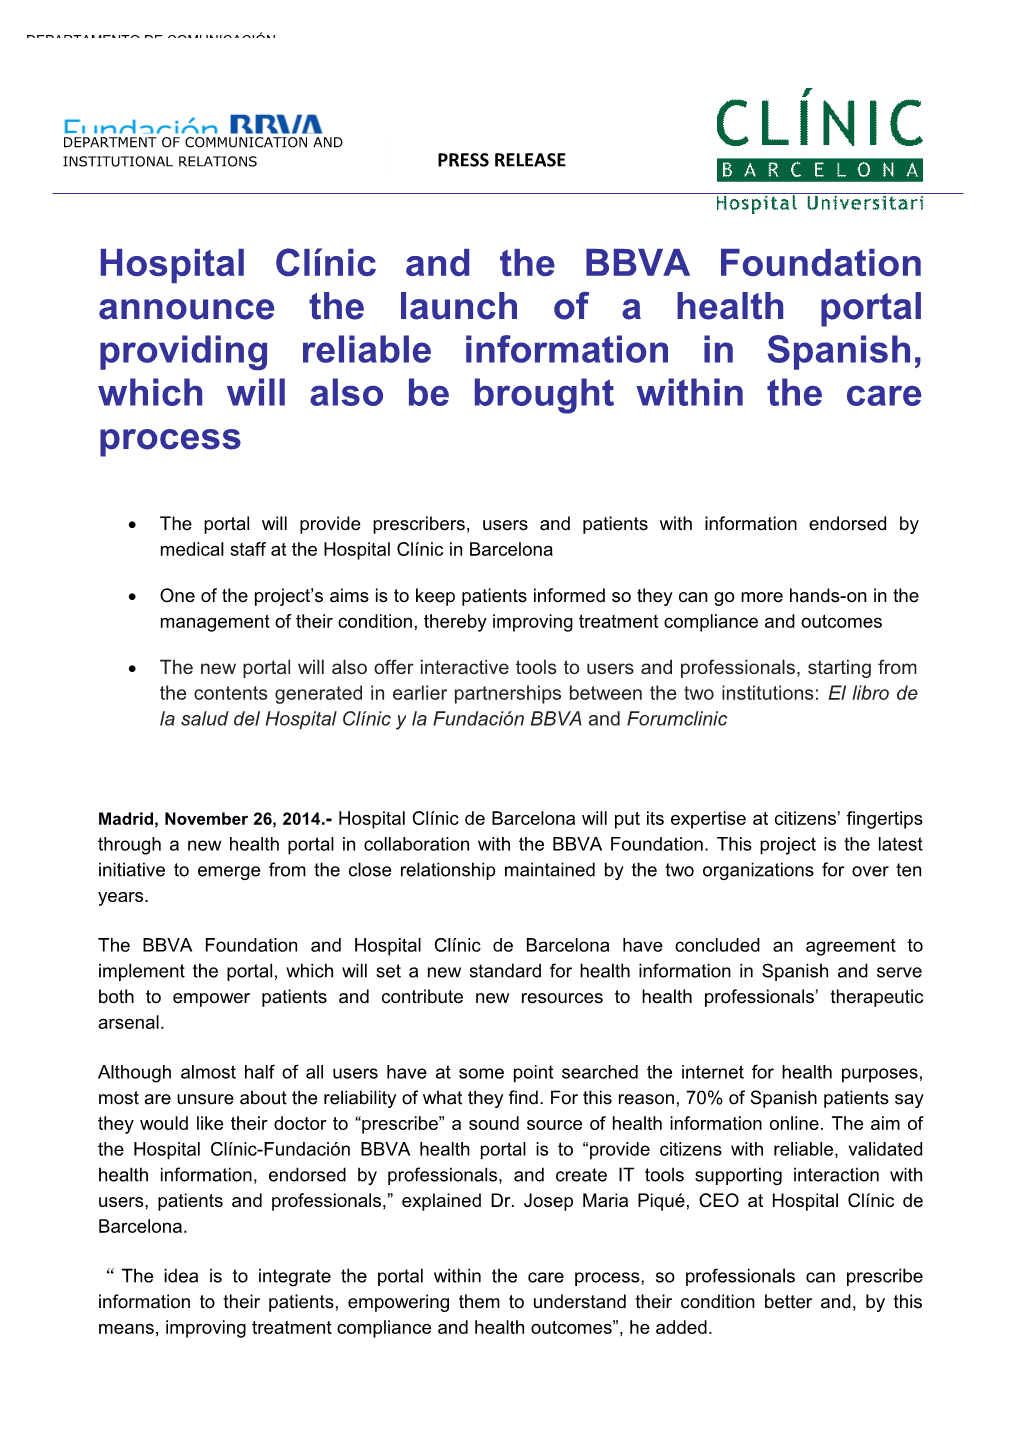 Hospital Clínic and the BBVA Foundationannounce the Launch of a Health Portalproviding